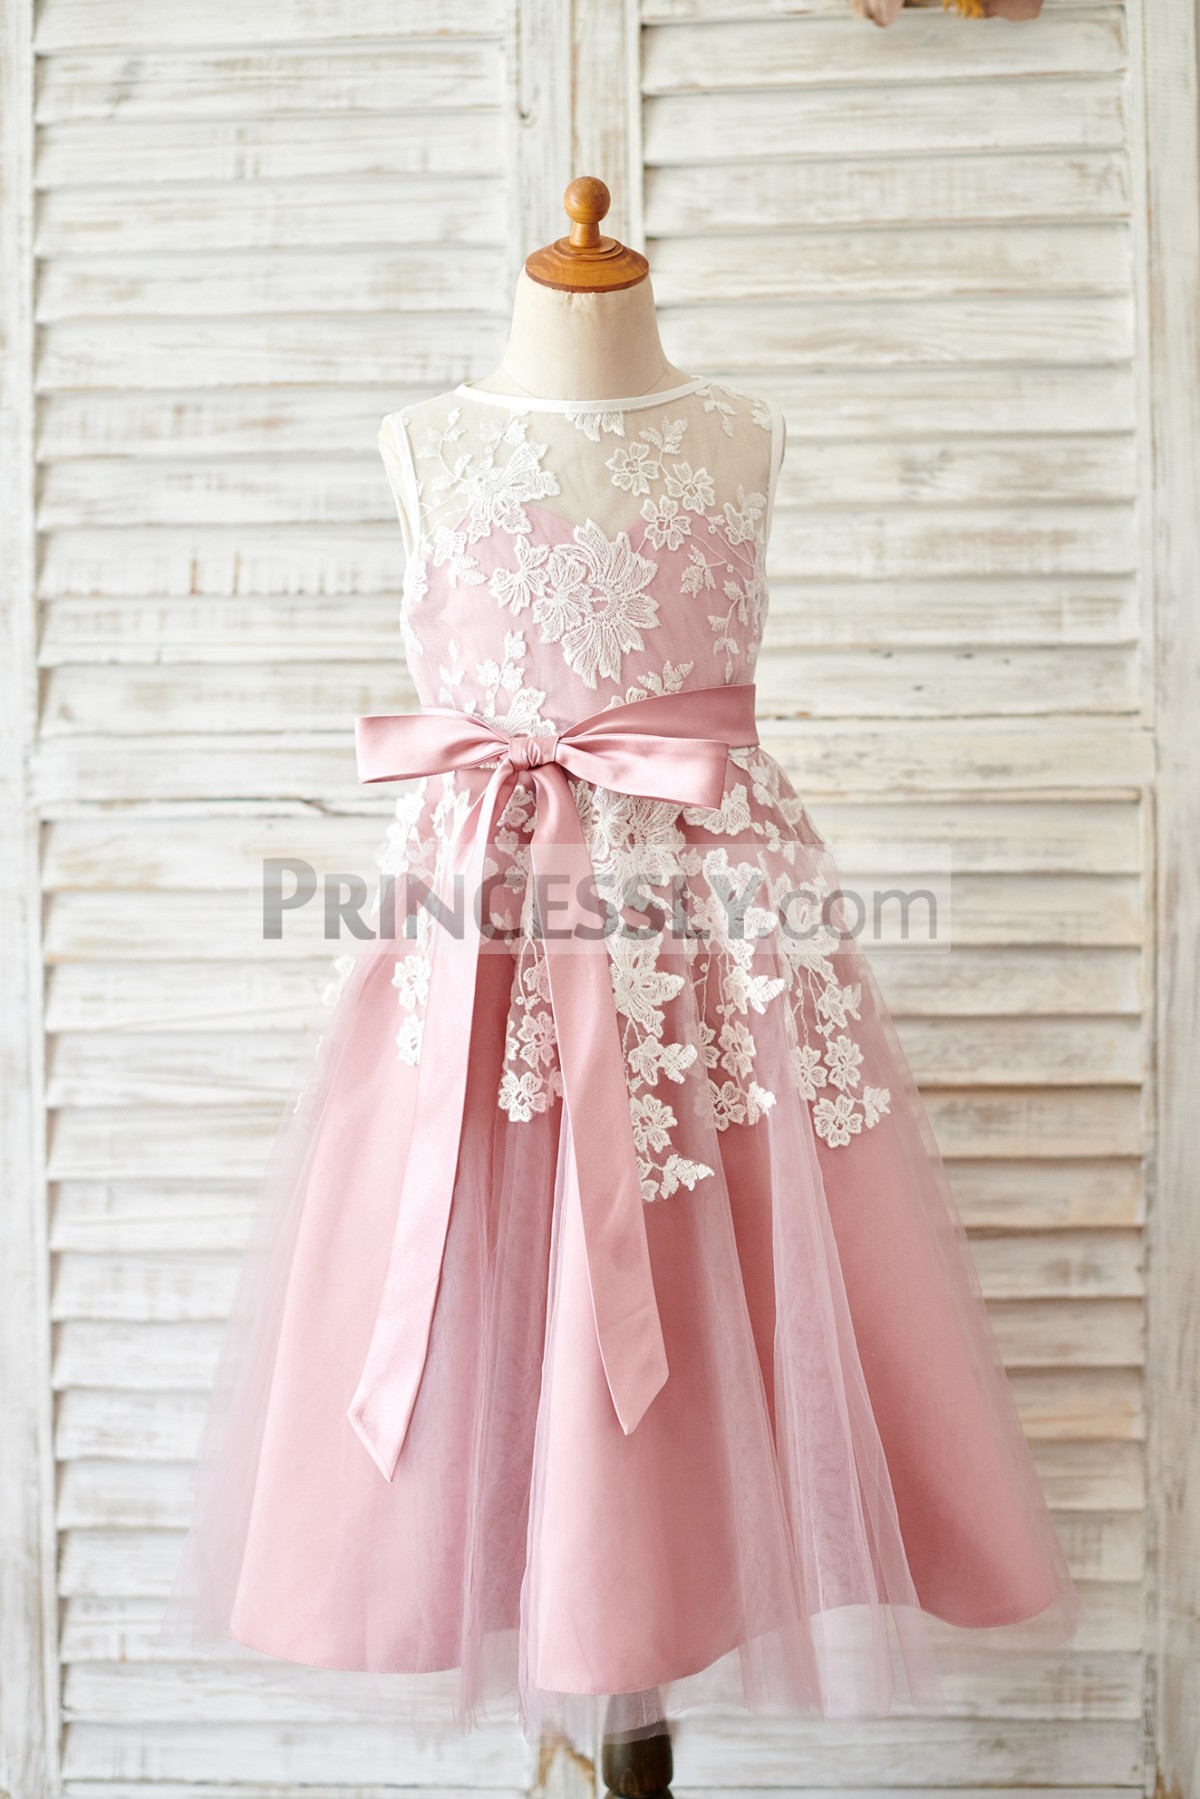 Princessly.com-K1003814-Princess Ivory Lace Mauve Tulle Sheer Neck Wedding Flower Girl Dress-31